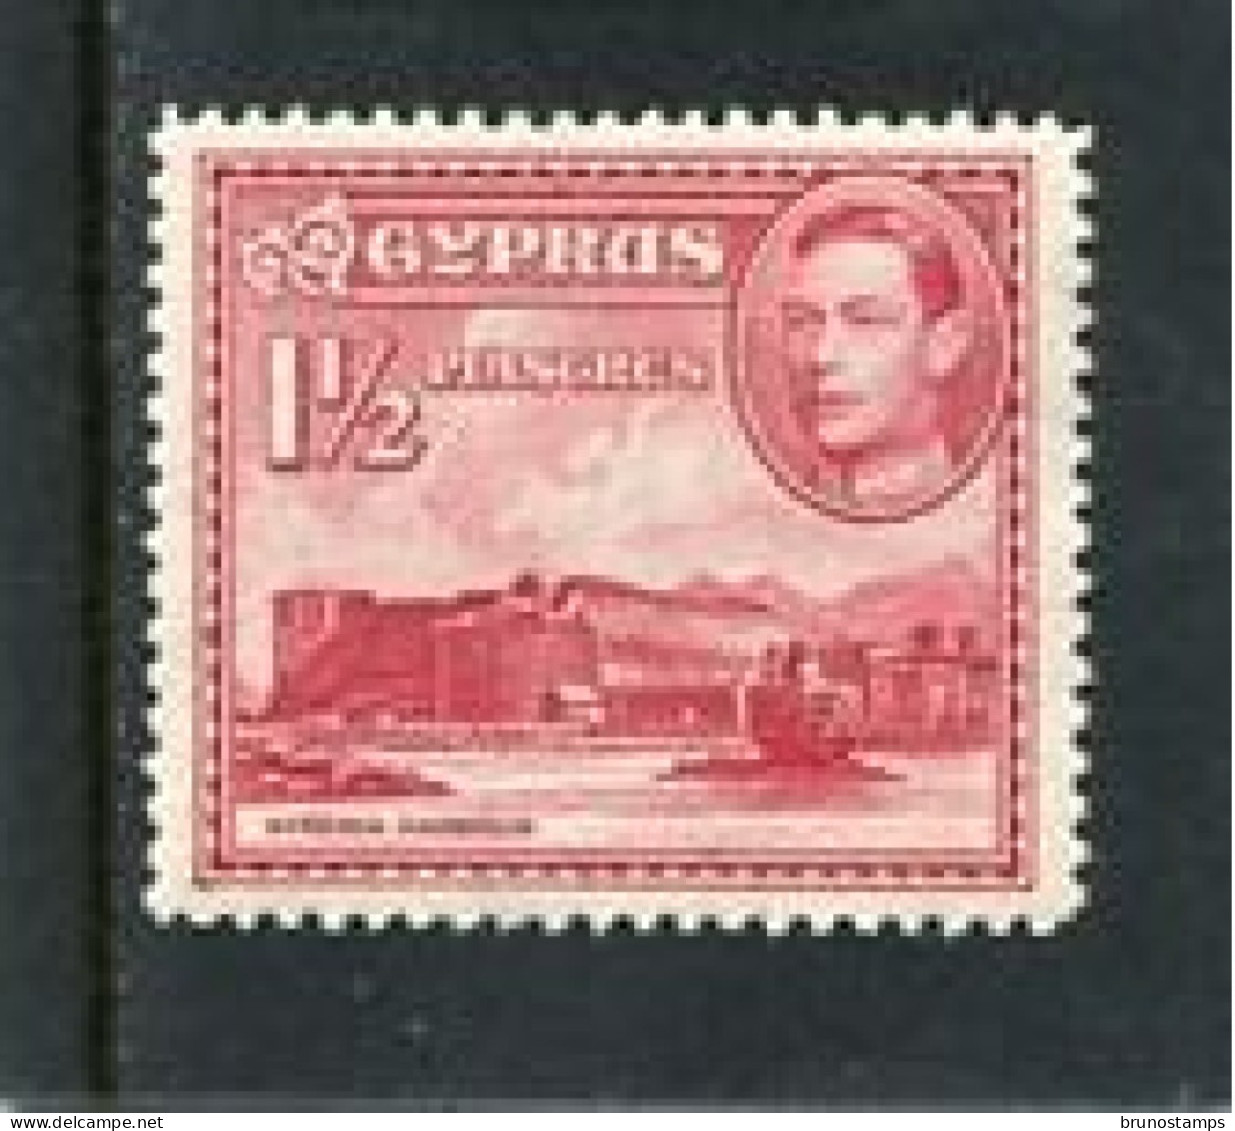 CYPRUS - 1938   GEORGE VI  1 1/2 Pi  MINT NH - Zypern (...-1960)